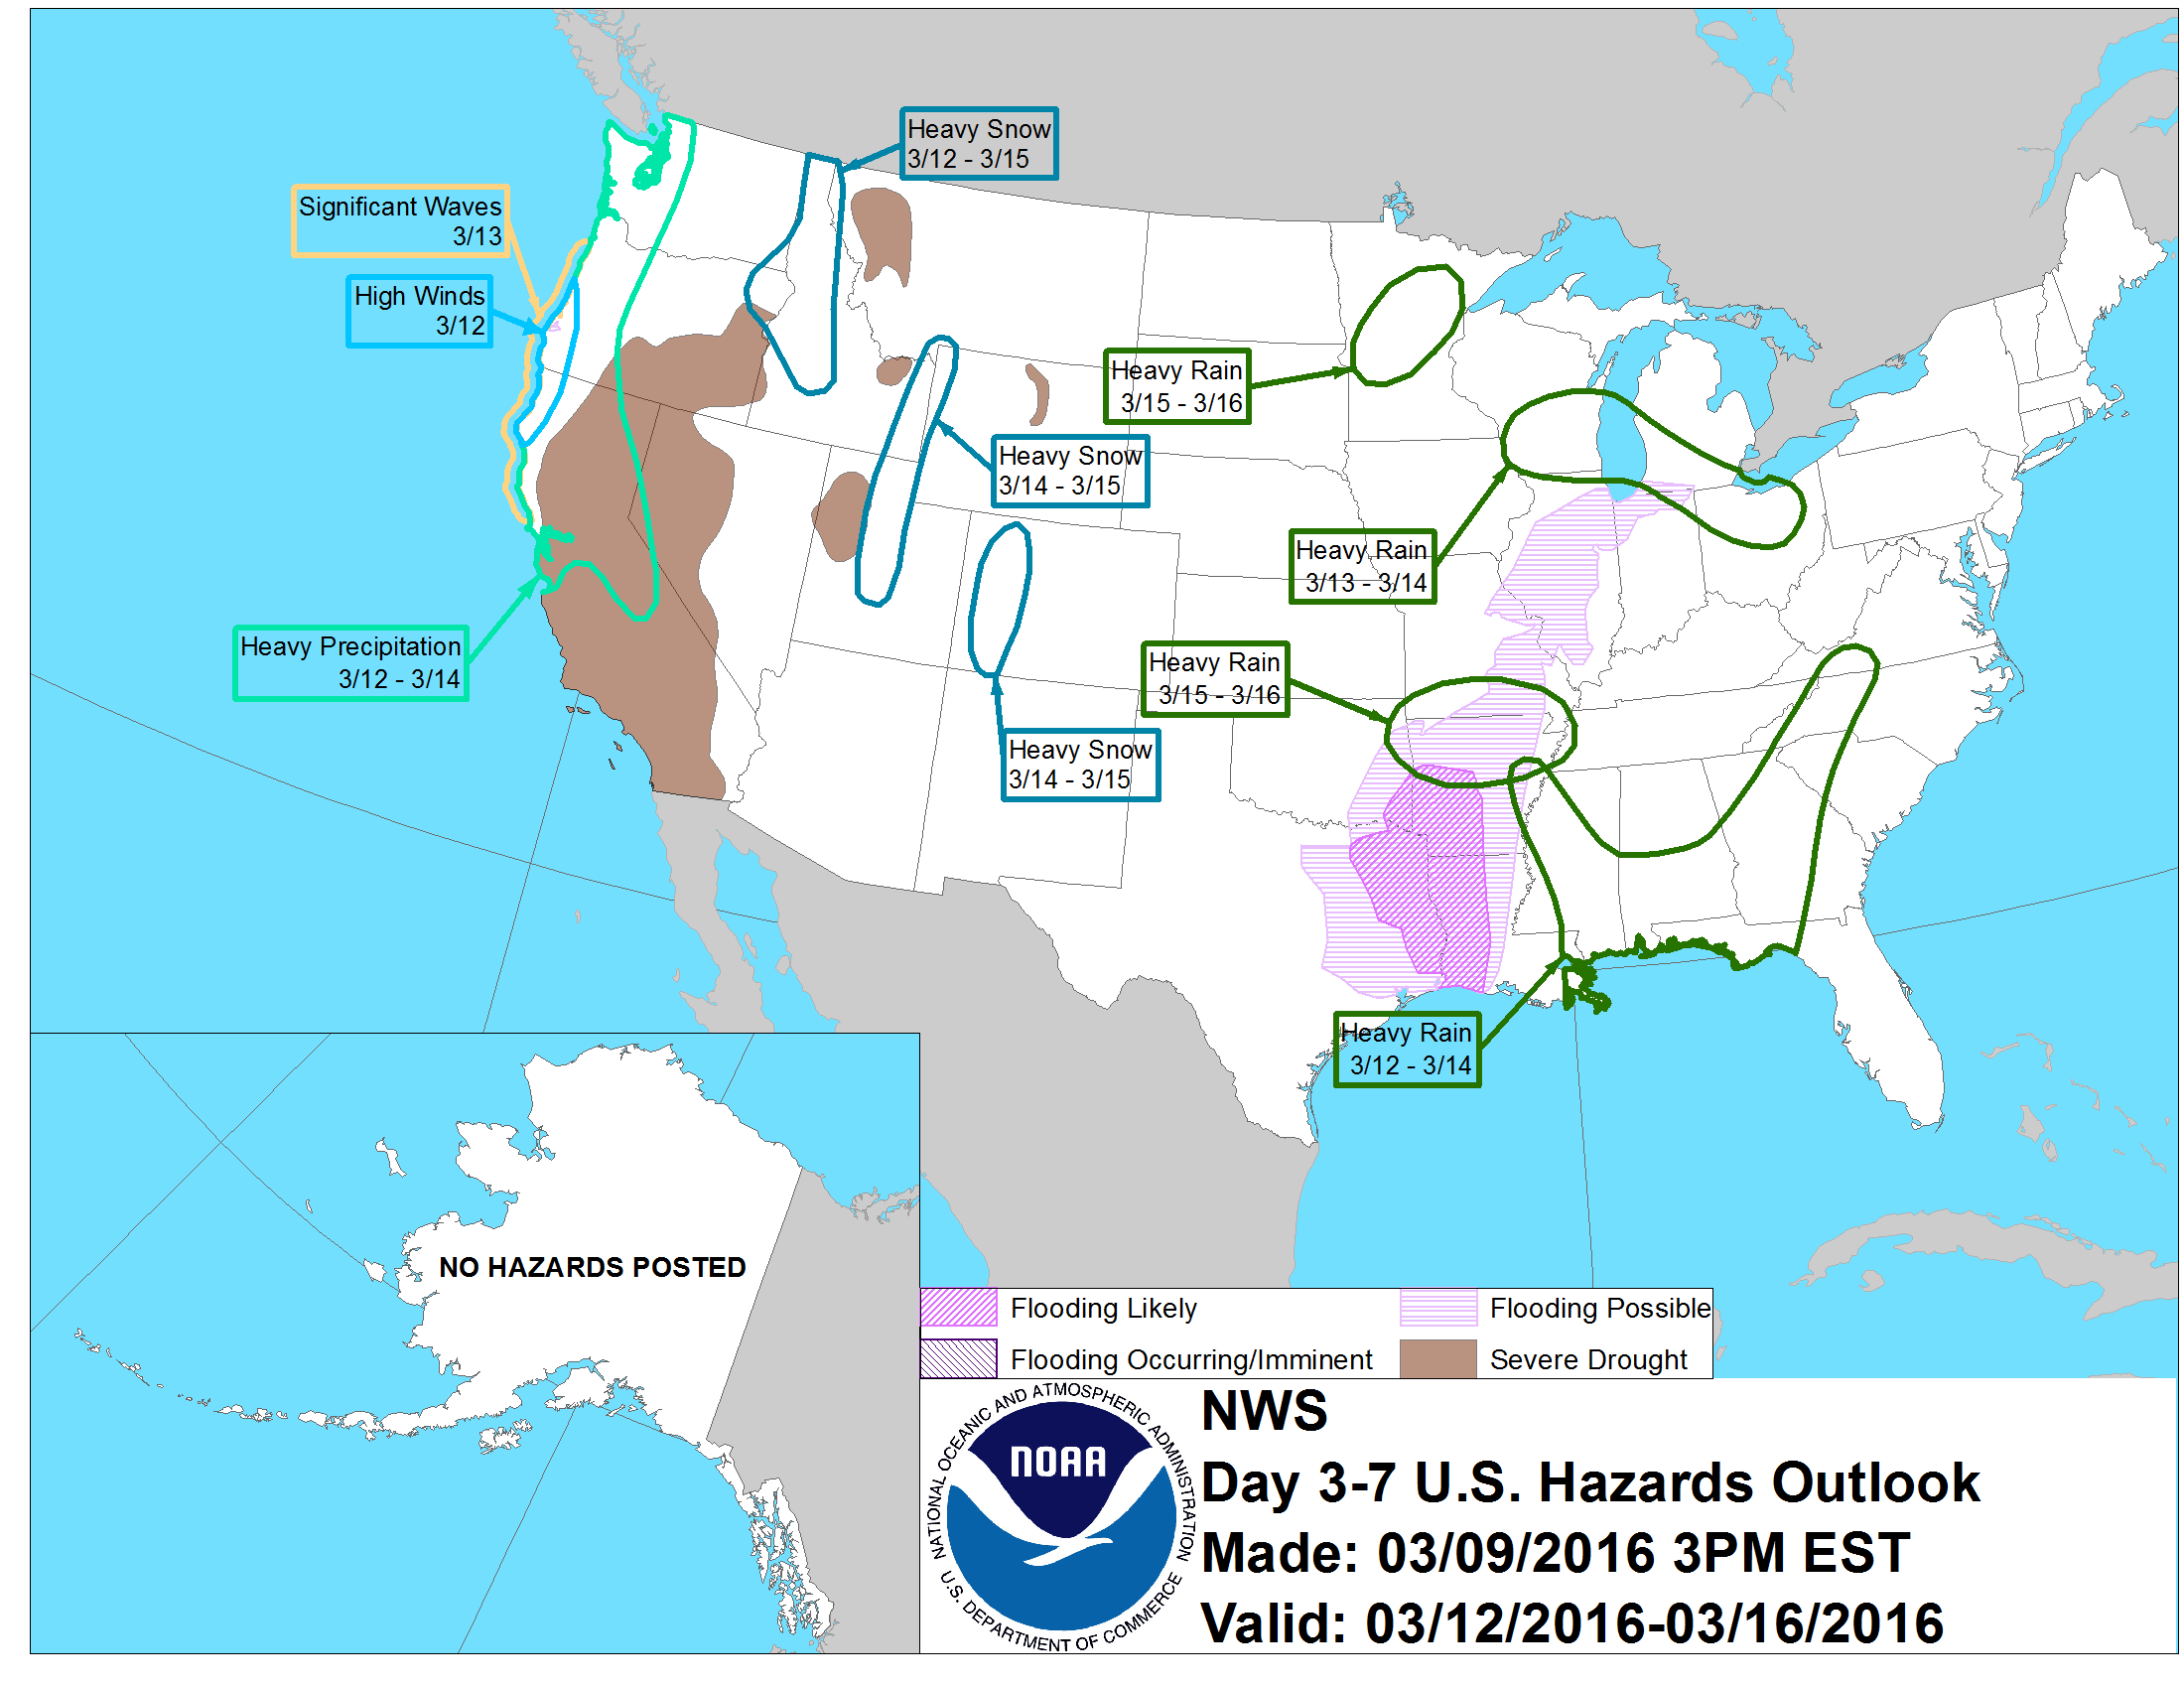 NOAA's long range forecast calling for "Heavy Precipitation" for CA March